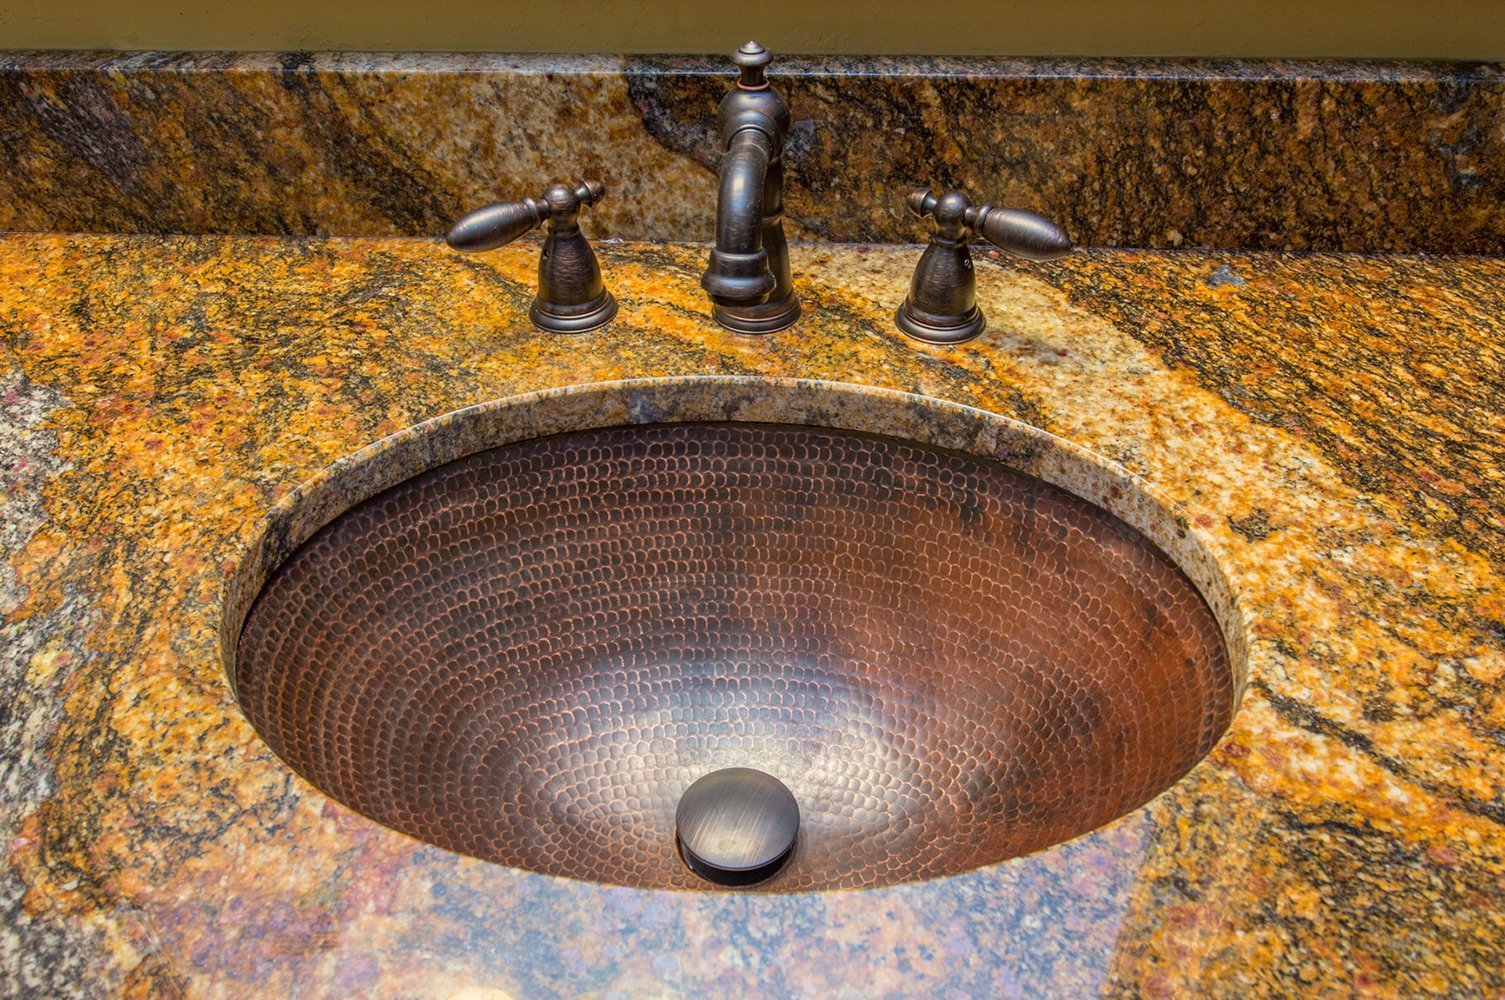 1.5" Non-Overflow Pop-up Bathroom Sink Drain - Oil Rubbed Bronze - Rustic Kitchen & Bath - Drain - Premier Copper Products